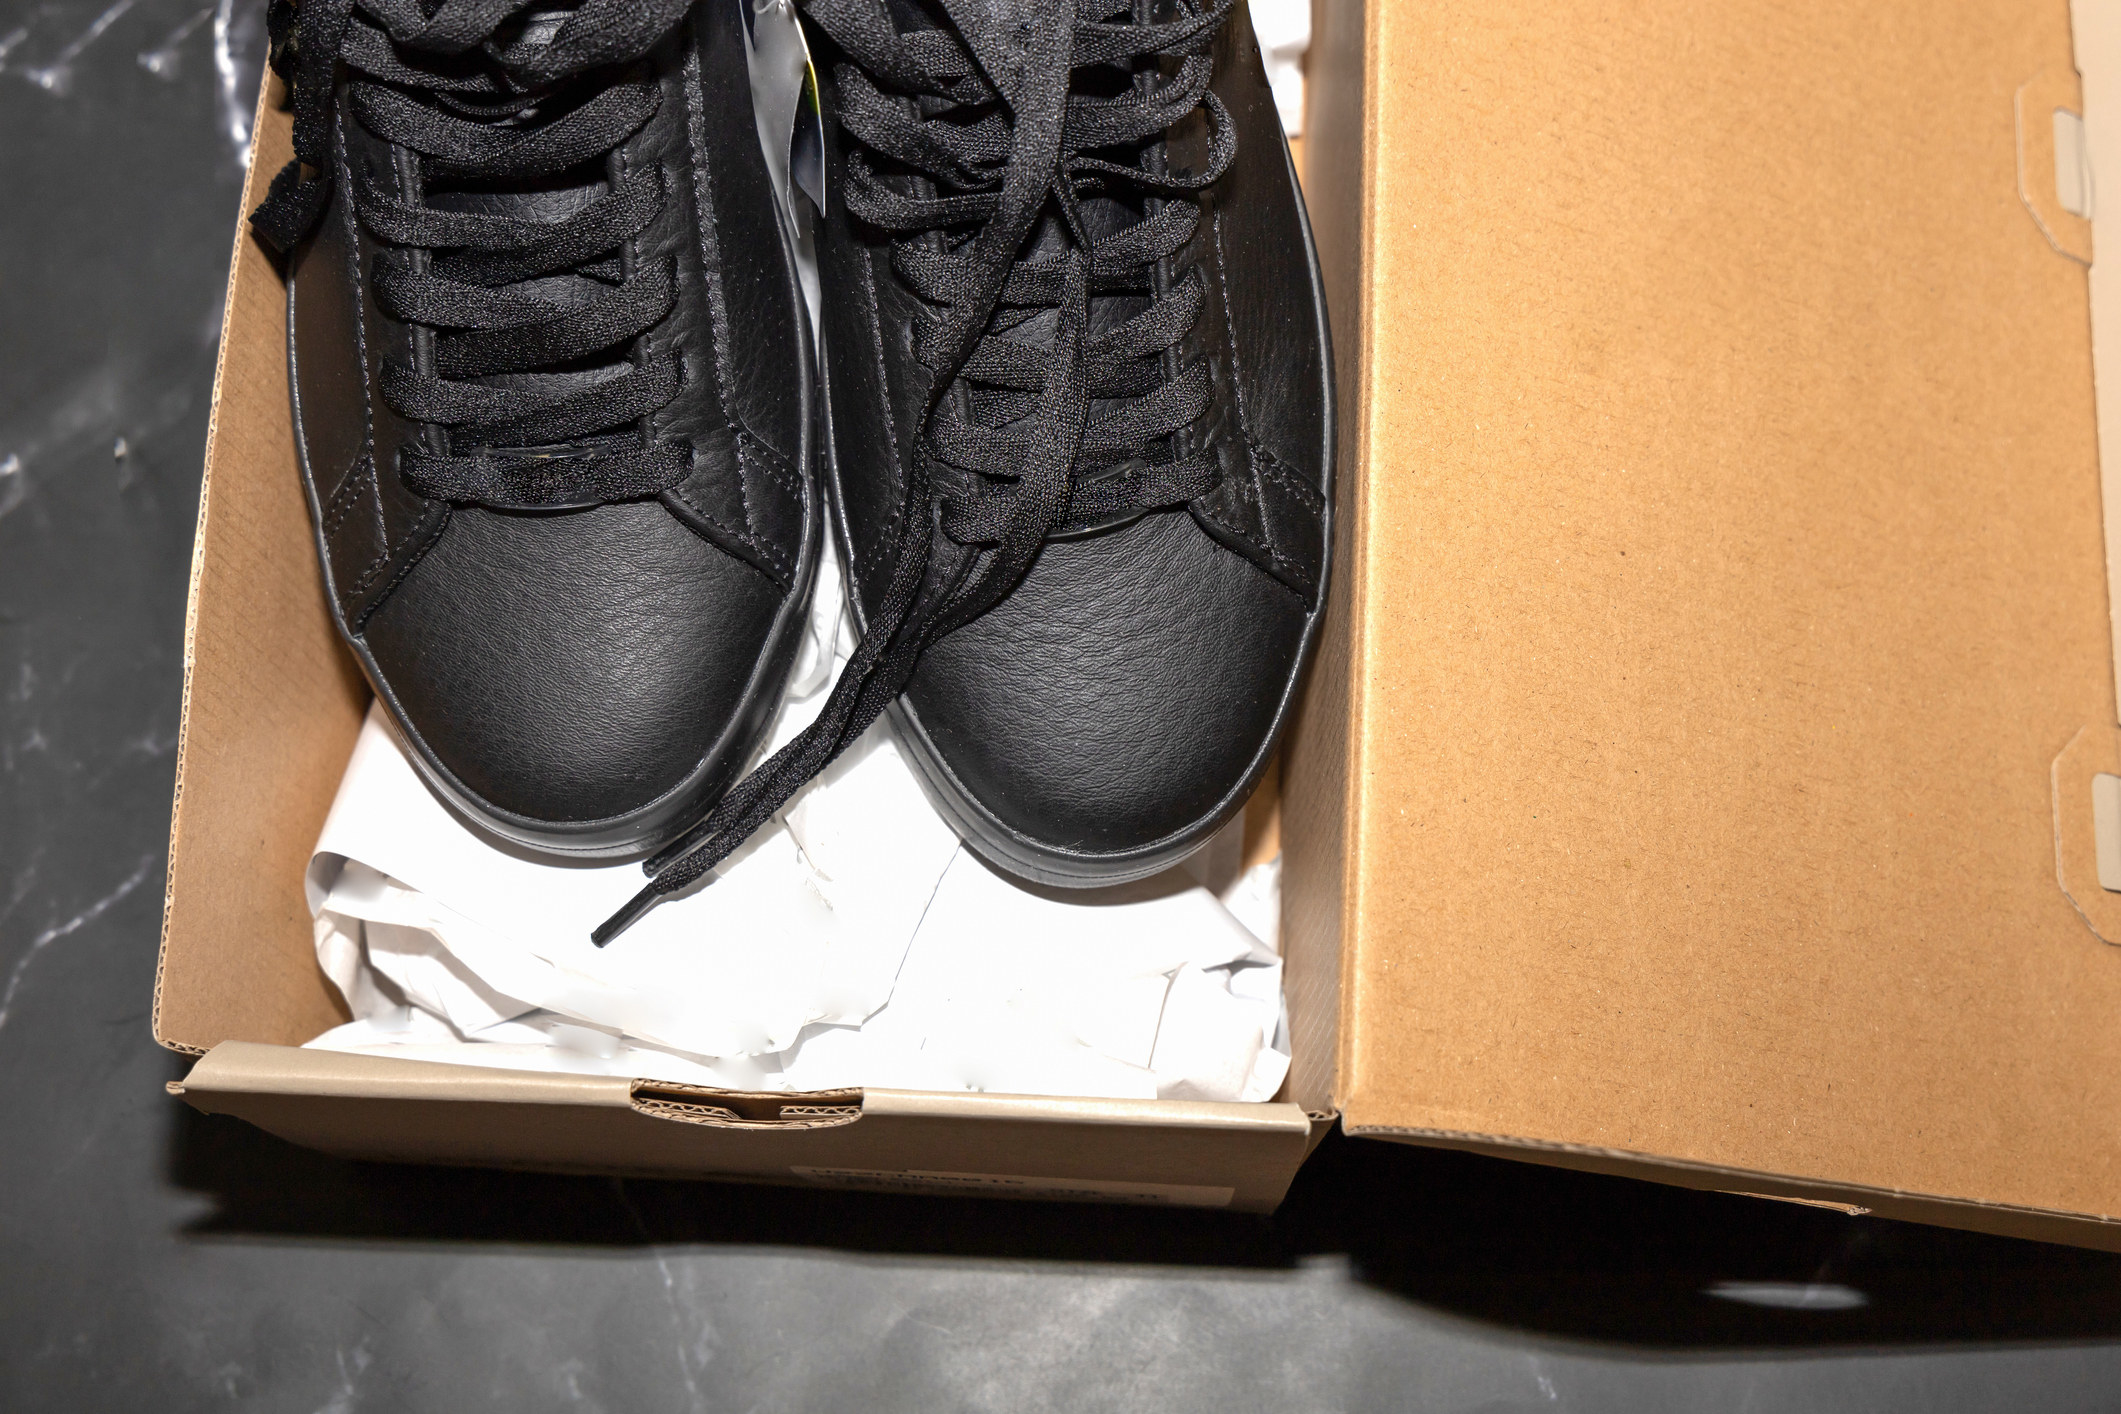 Sneakers in a shoebox